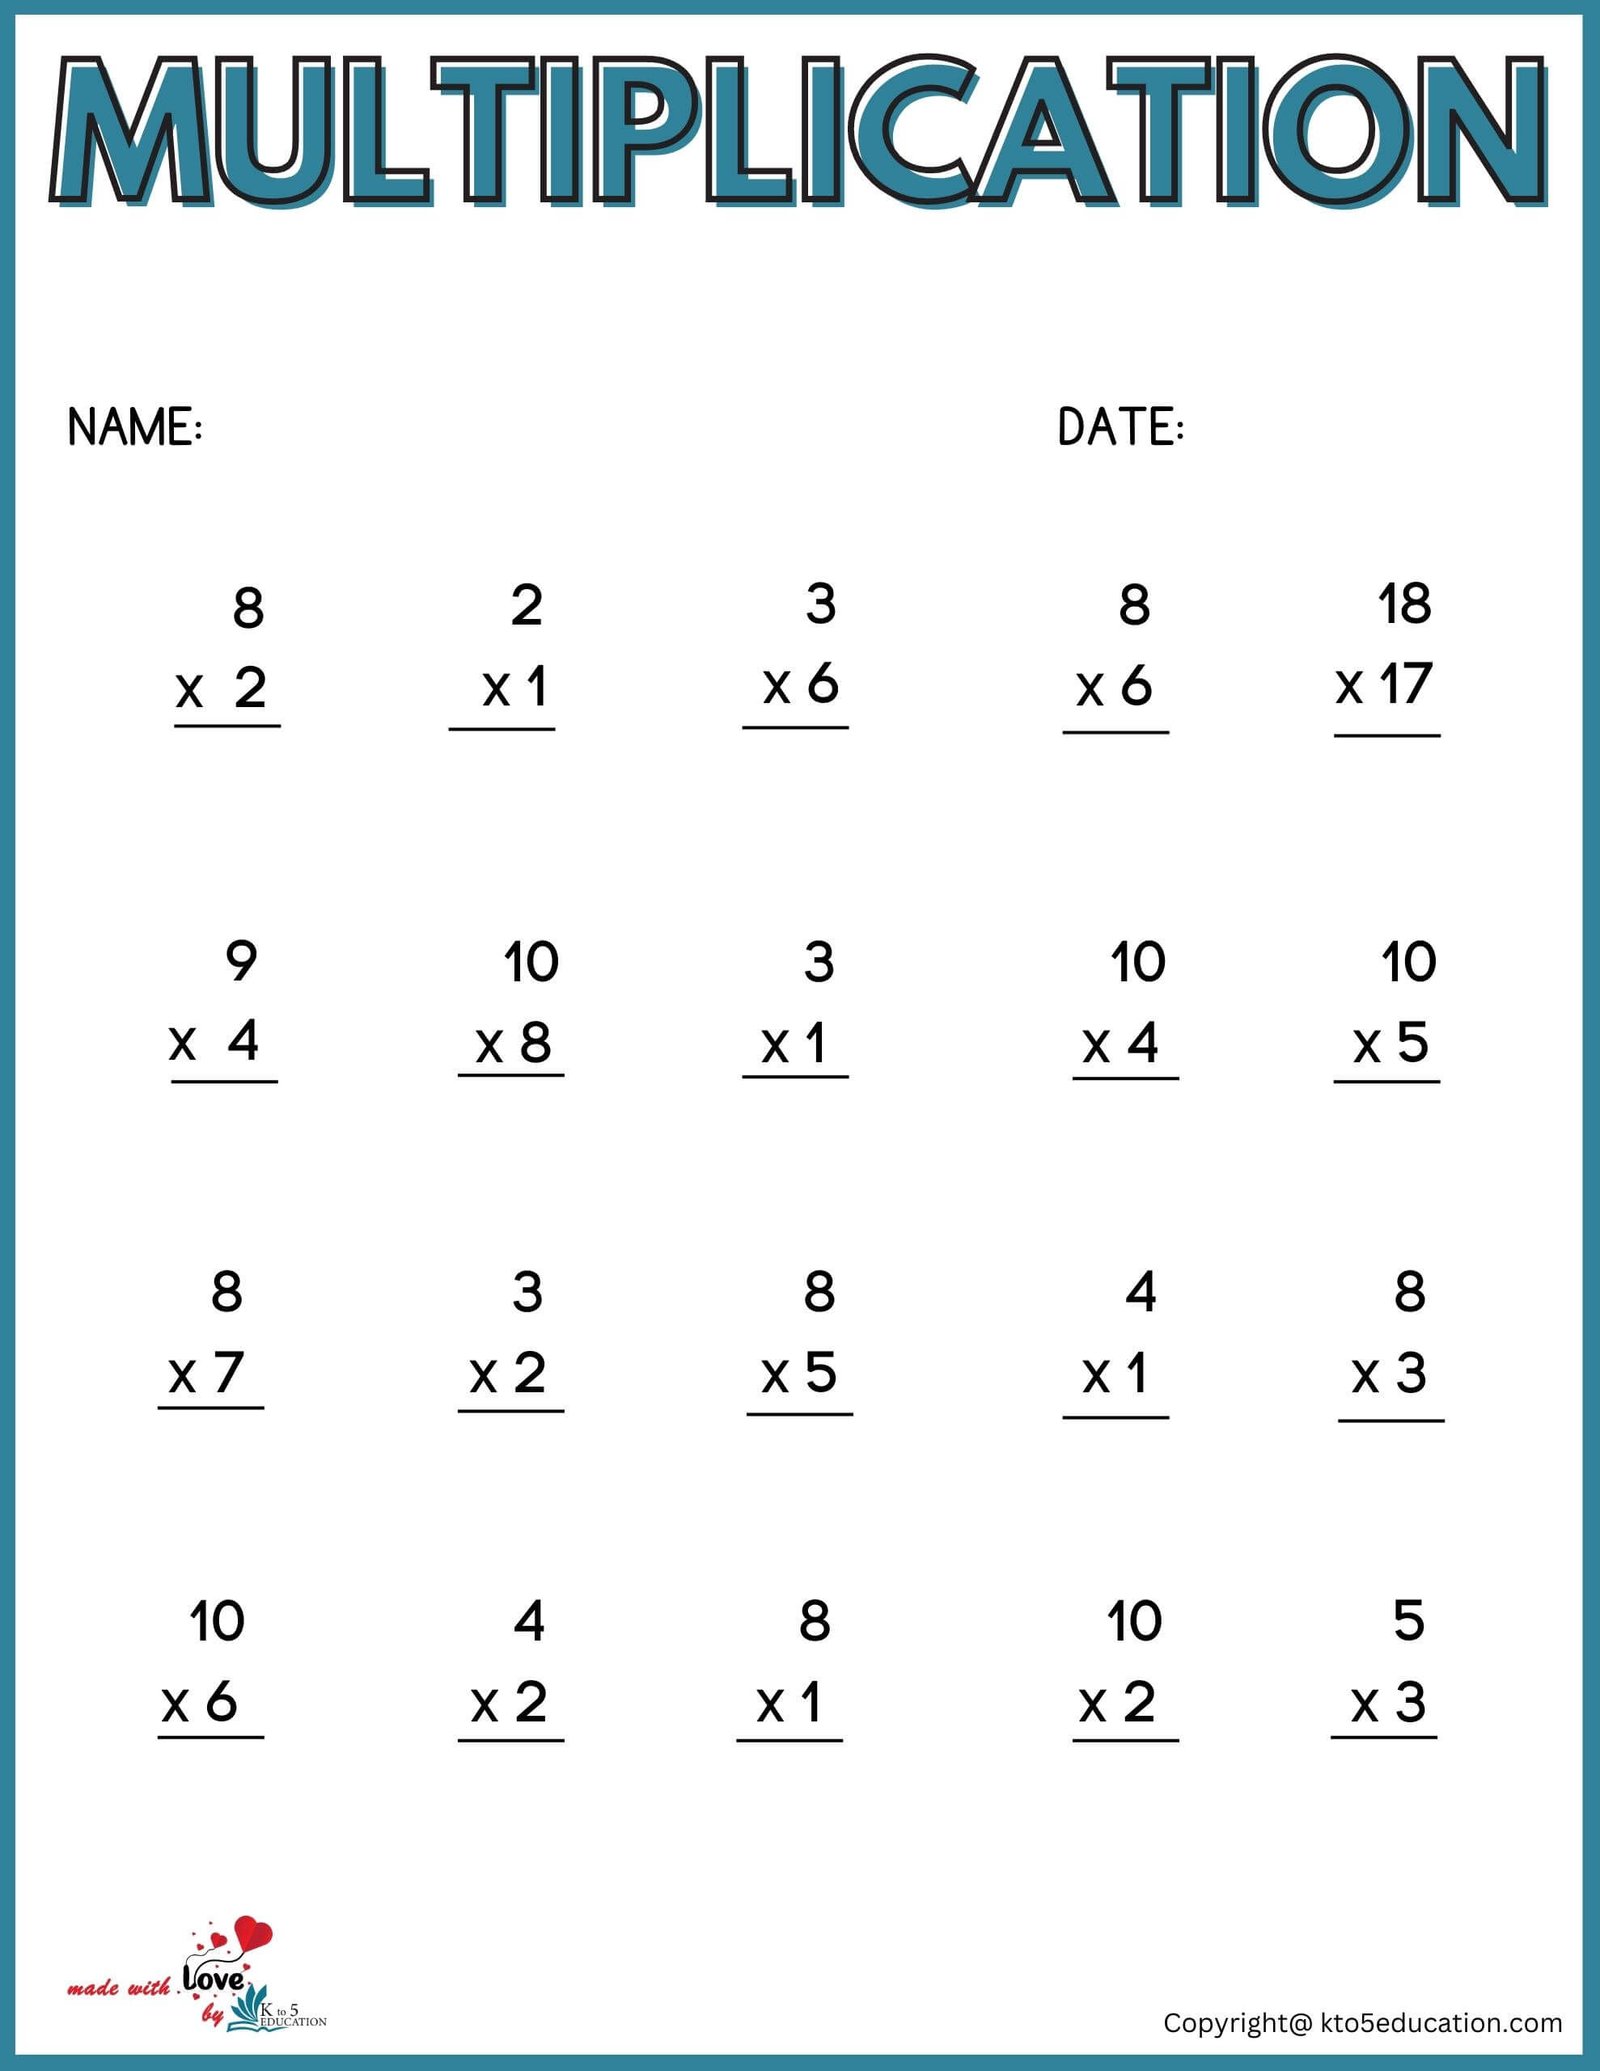 Multiplication Maths Worksheet